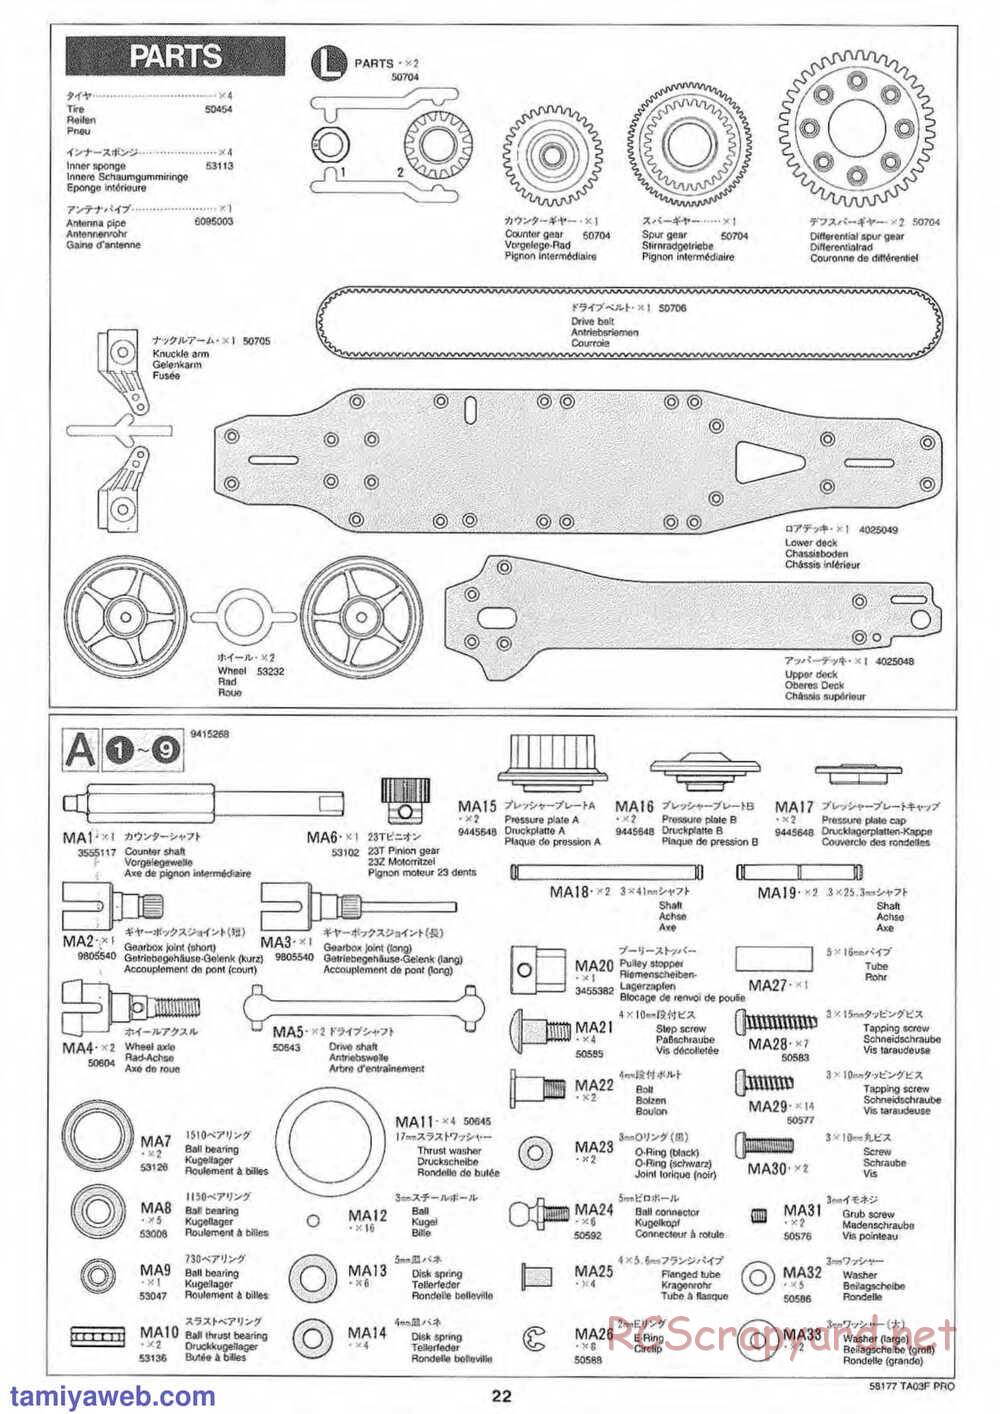 Tamiya - TA-03F Pro Chassis - Manual - Page 22